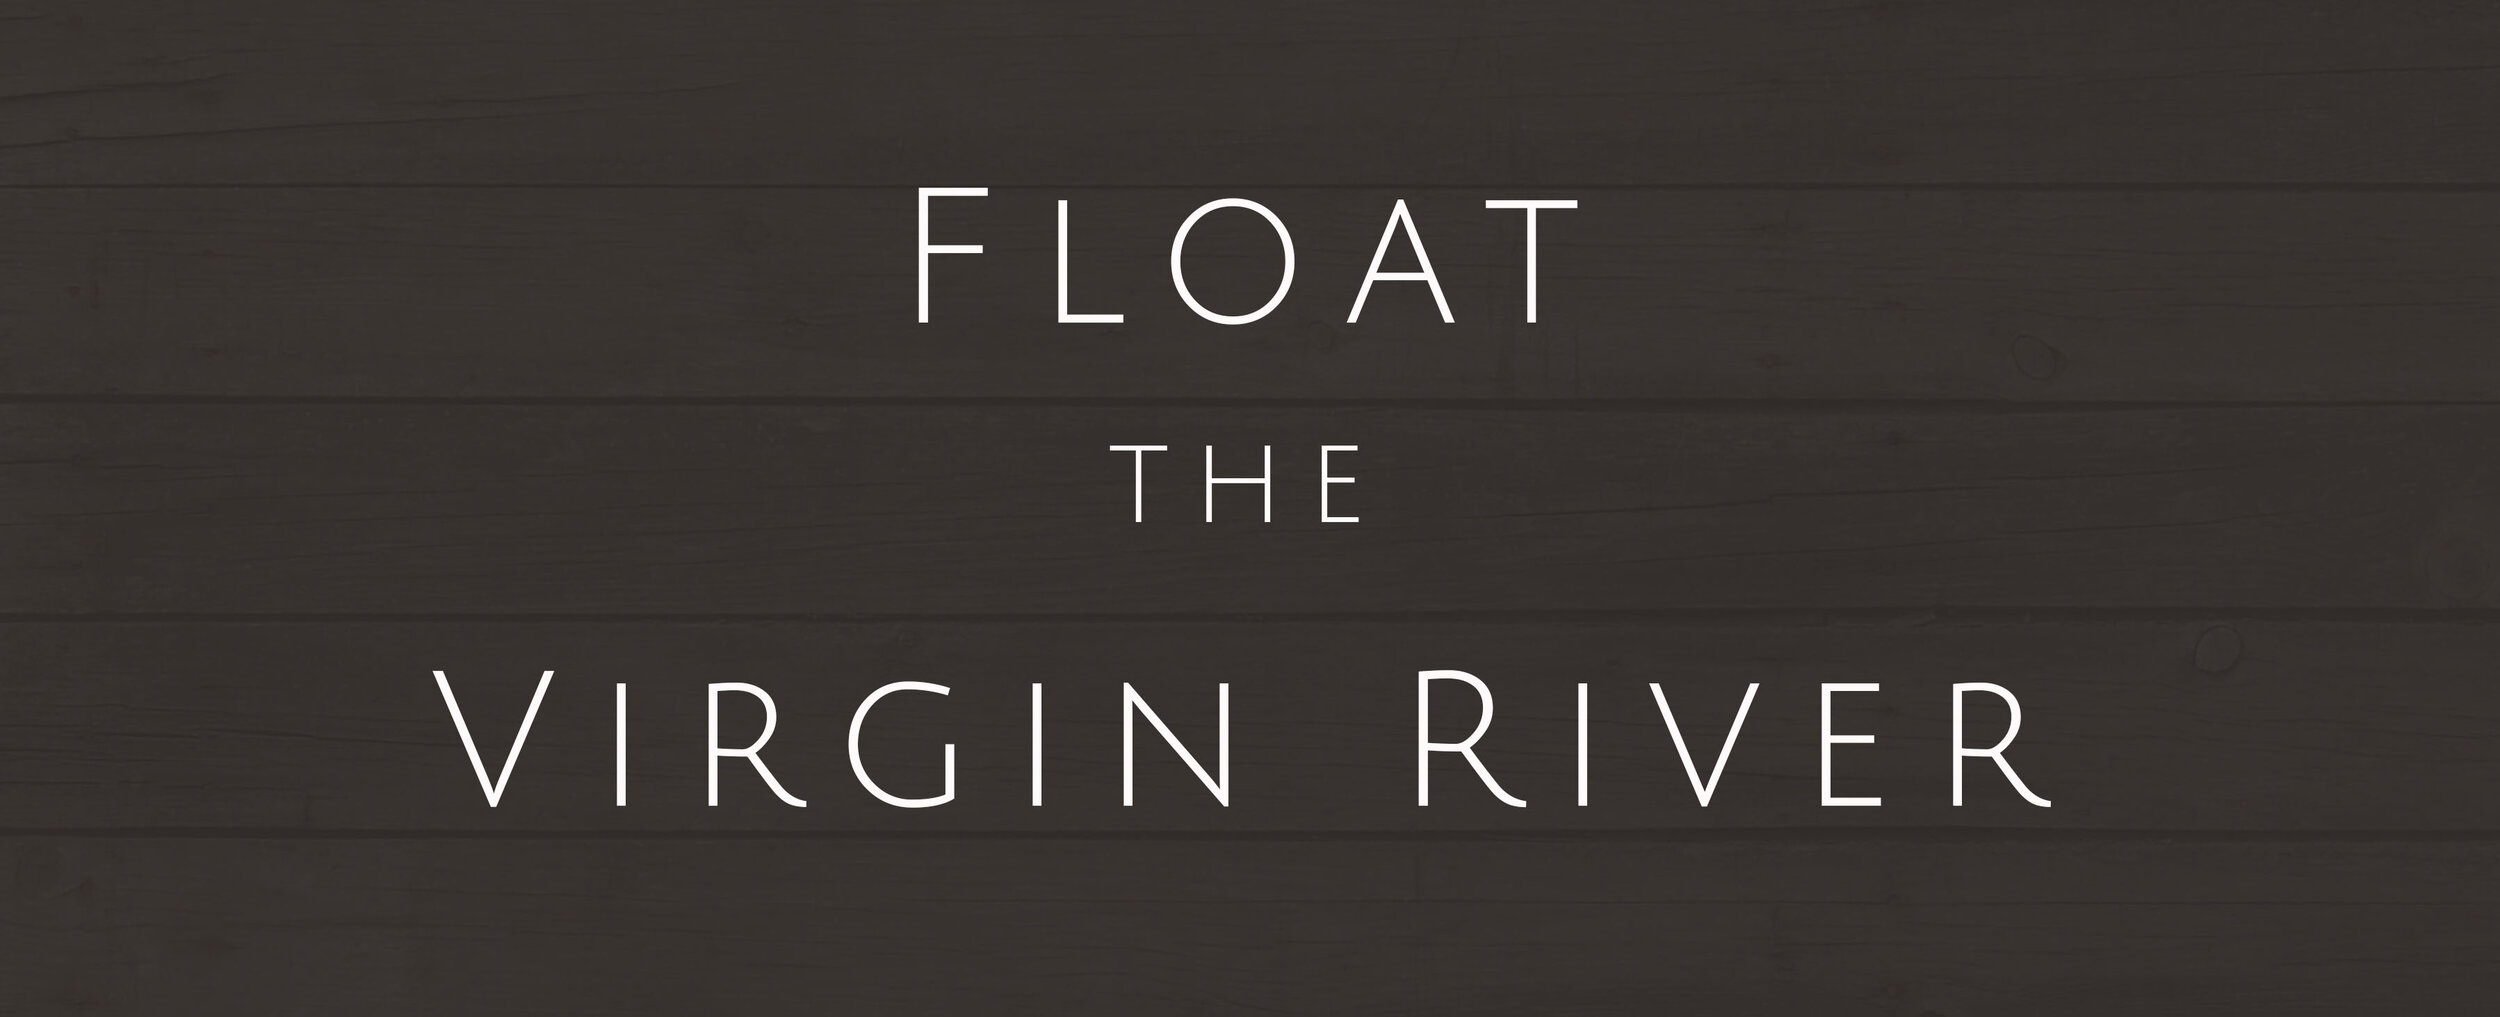 Zion - River Floating.jpg